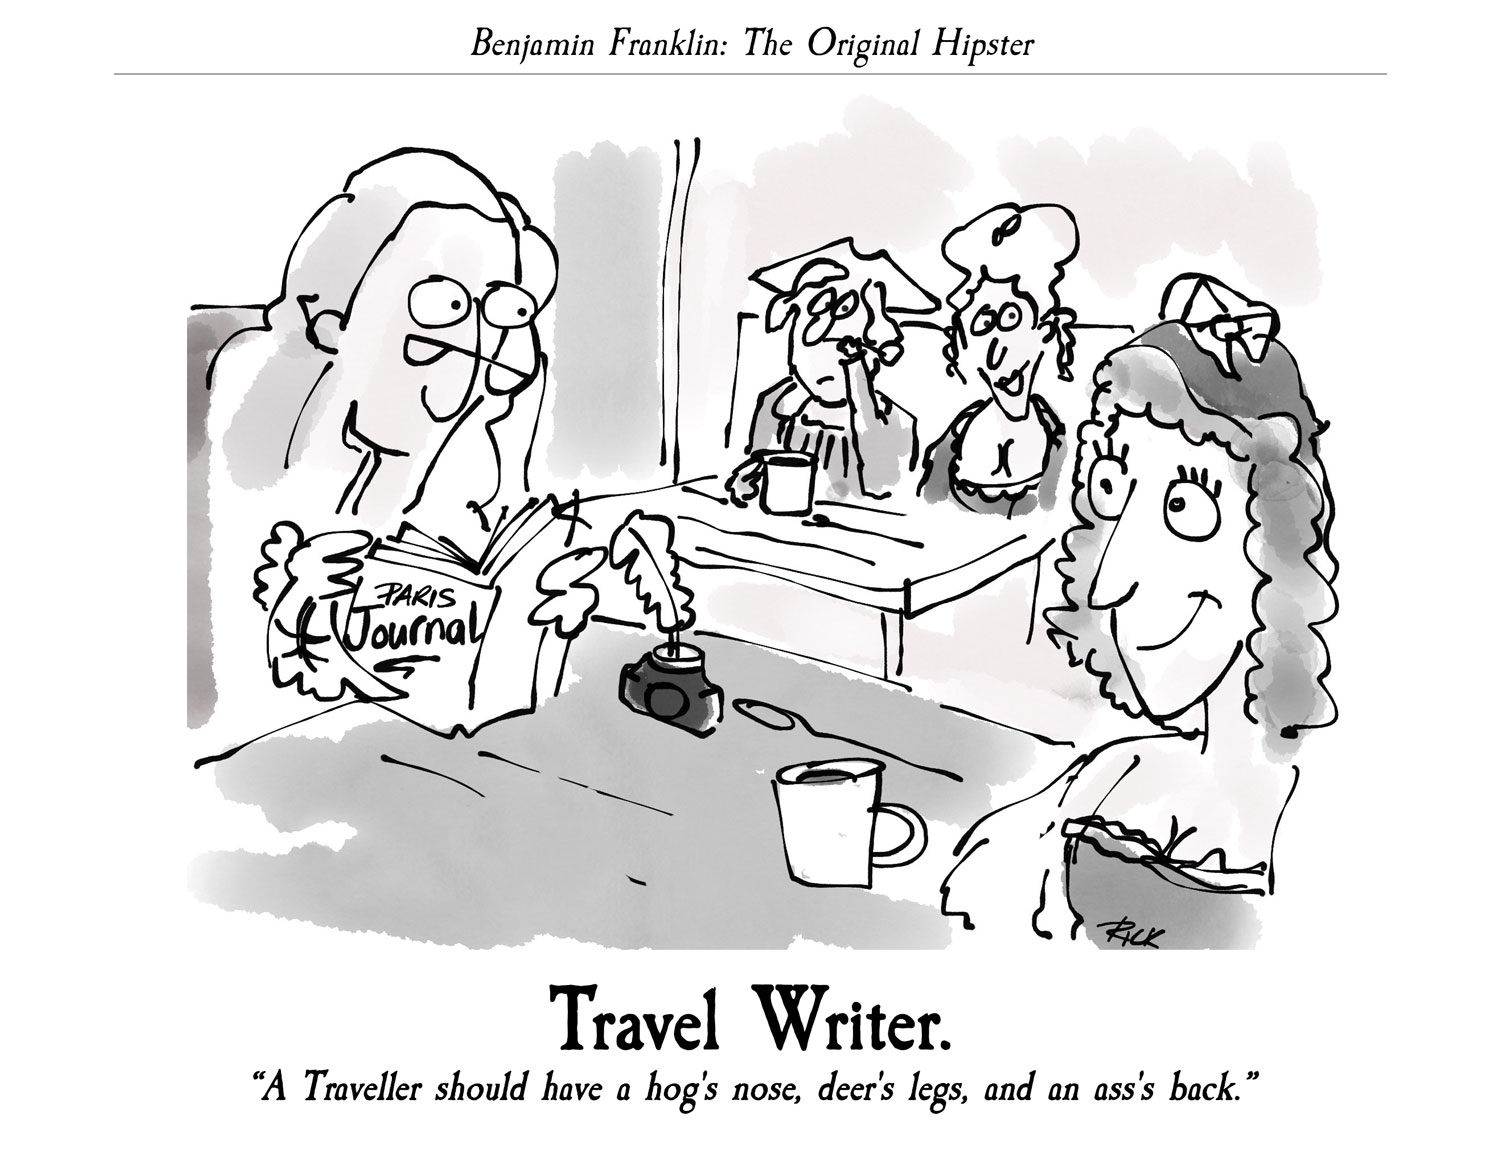 Benjamin Franklin: The Original Hipster - Travel Writer